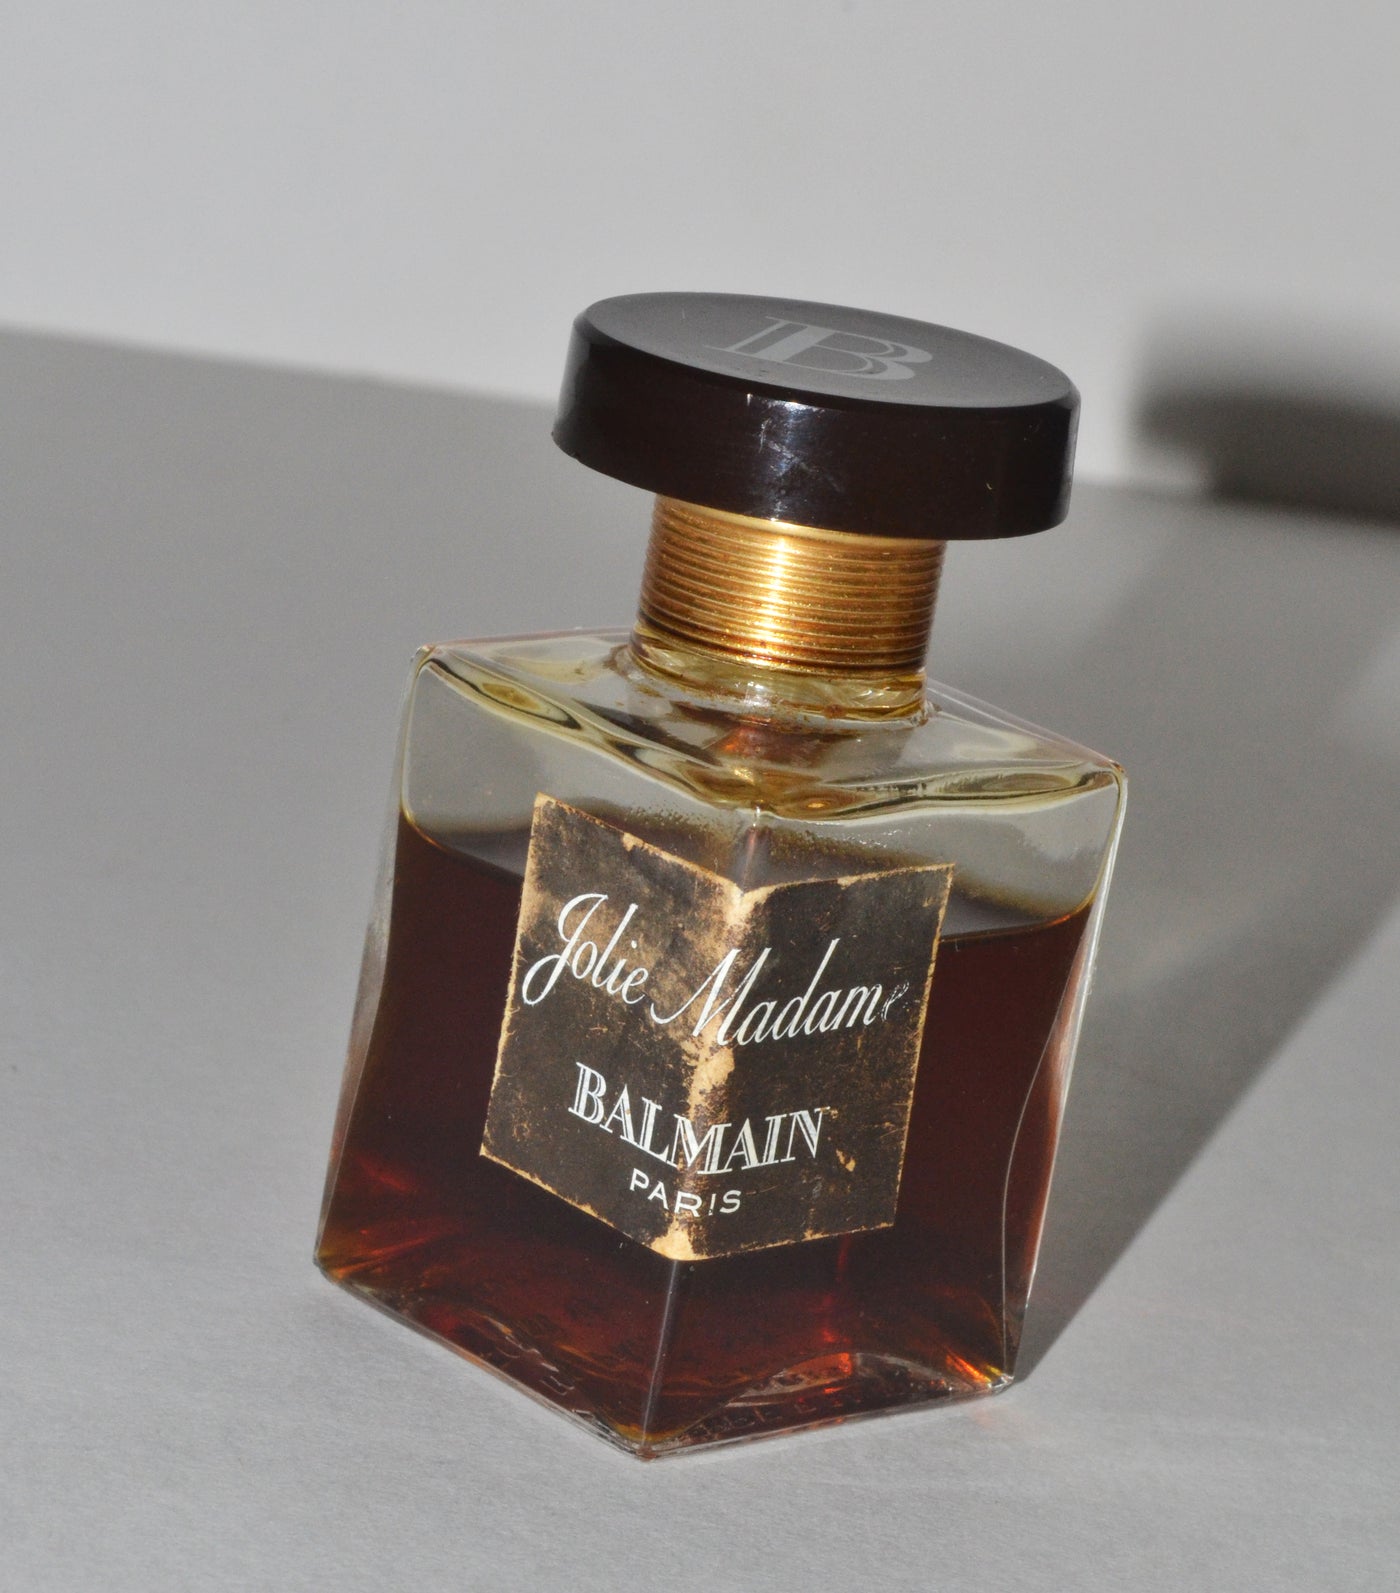 Jolie Madam Perfume By Balmain